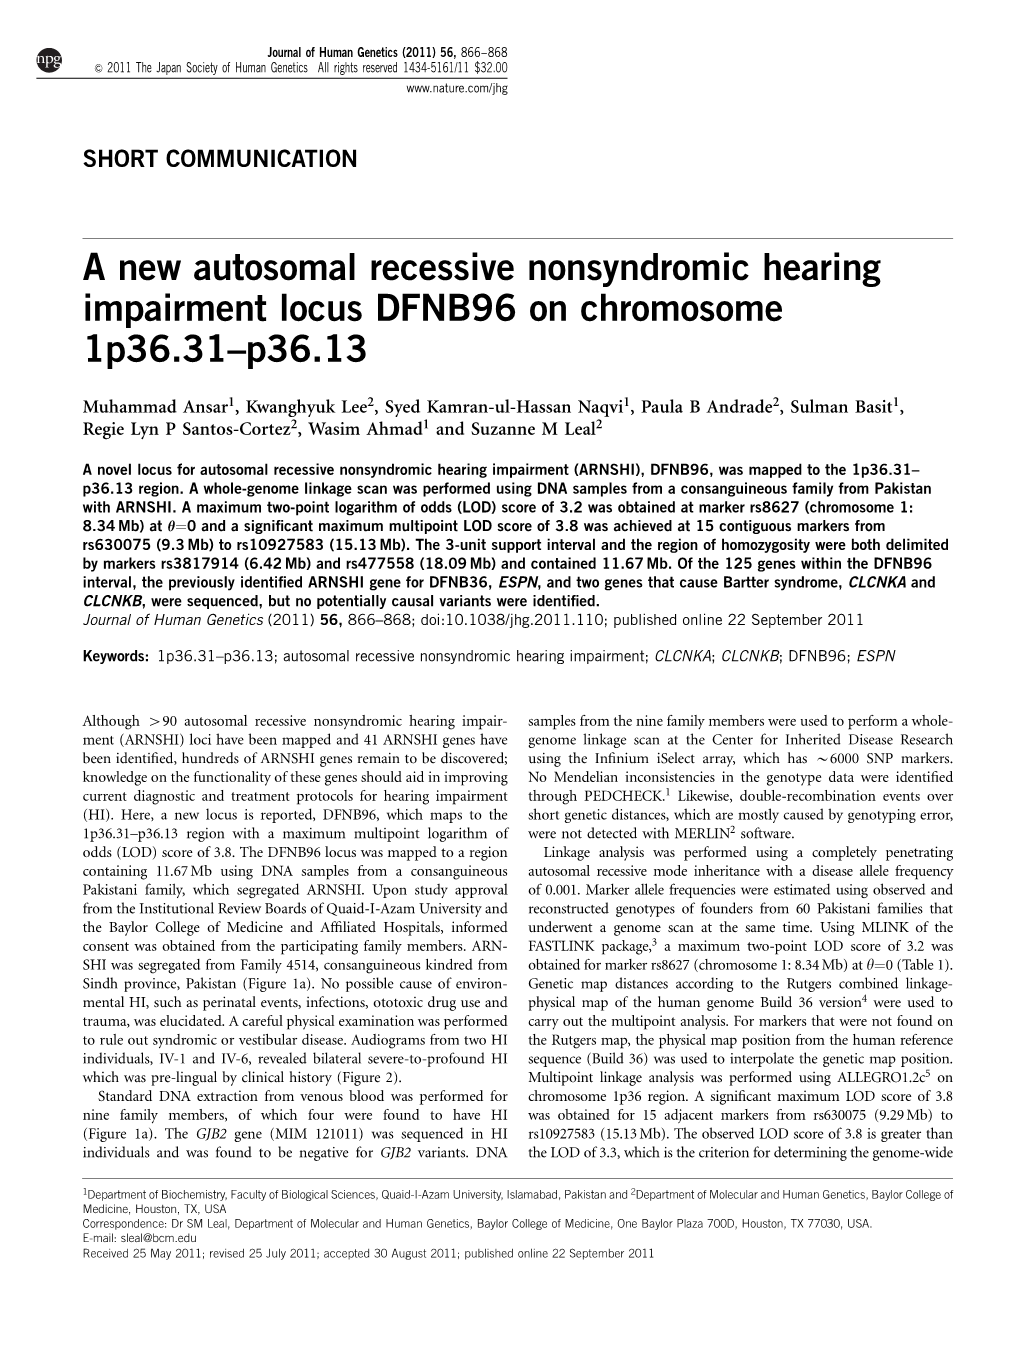 A New Autosomal Recessive Nonsyndromic Hearing Impairment Locus DFNB96 on Chromosome 1P36.31–P36.13